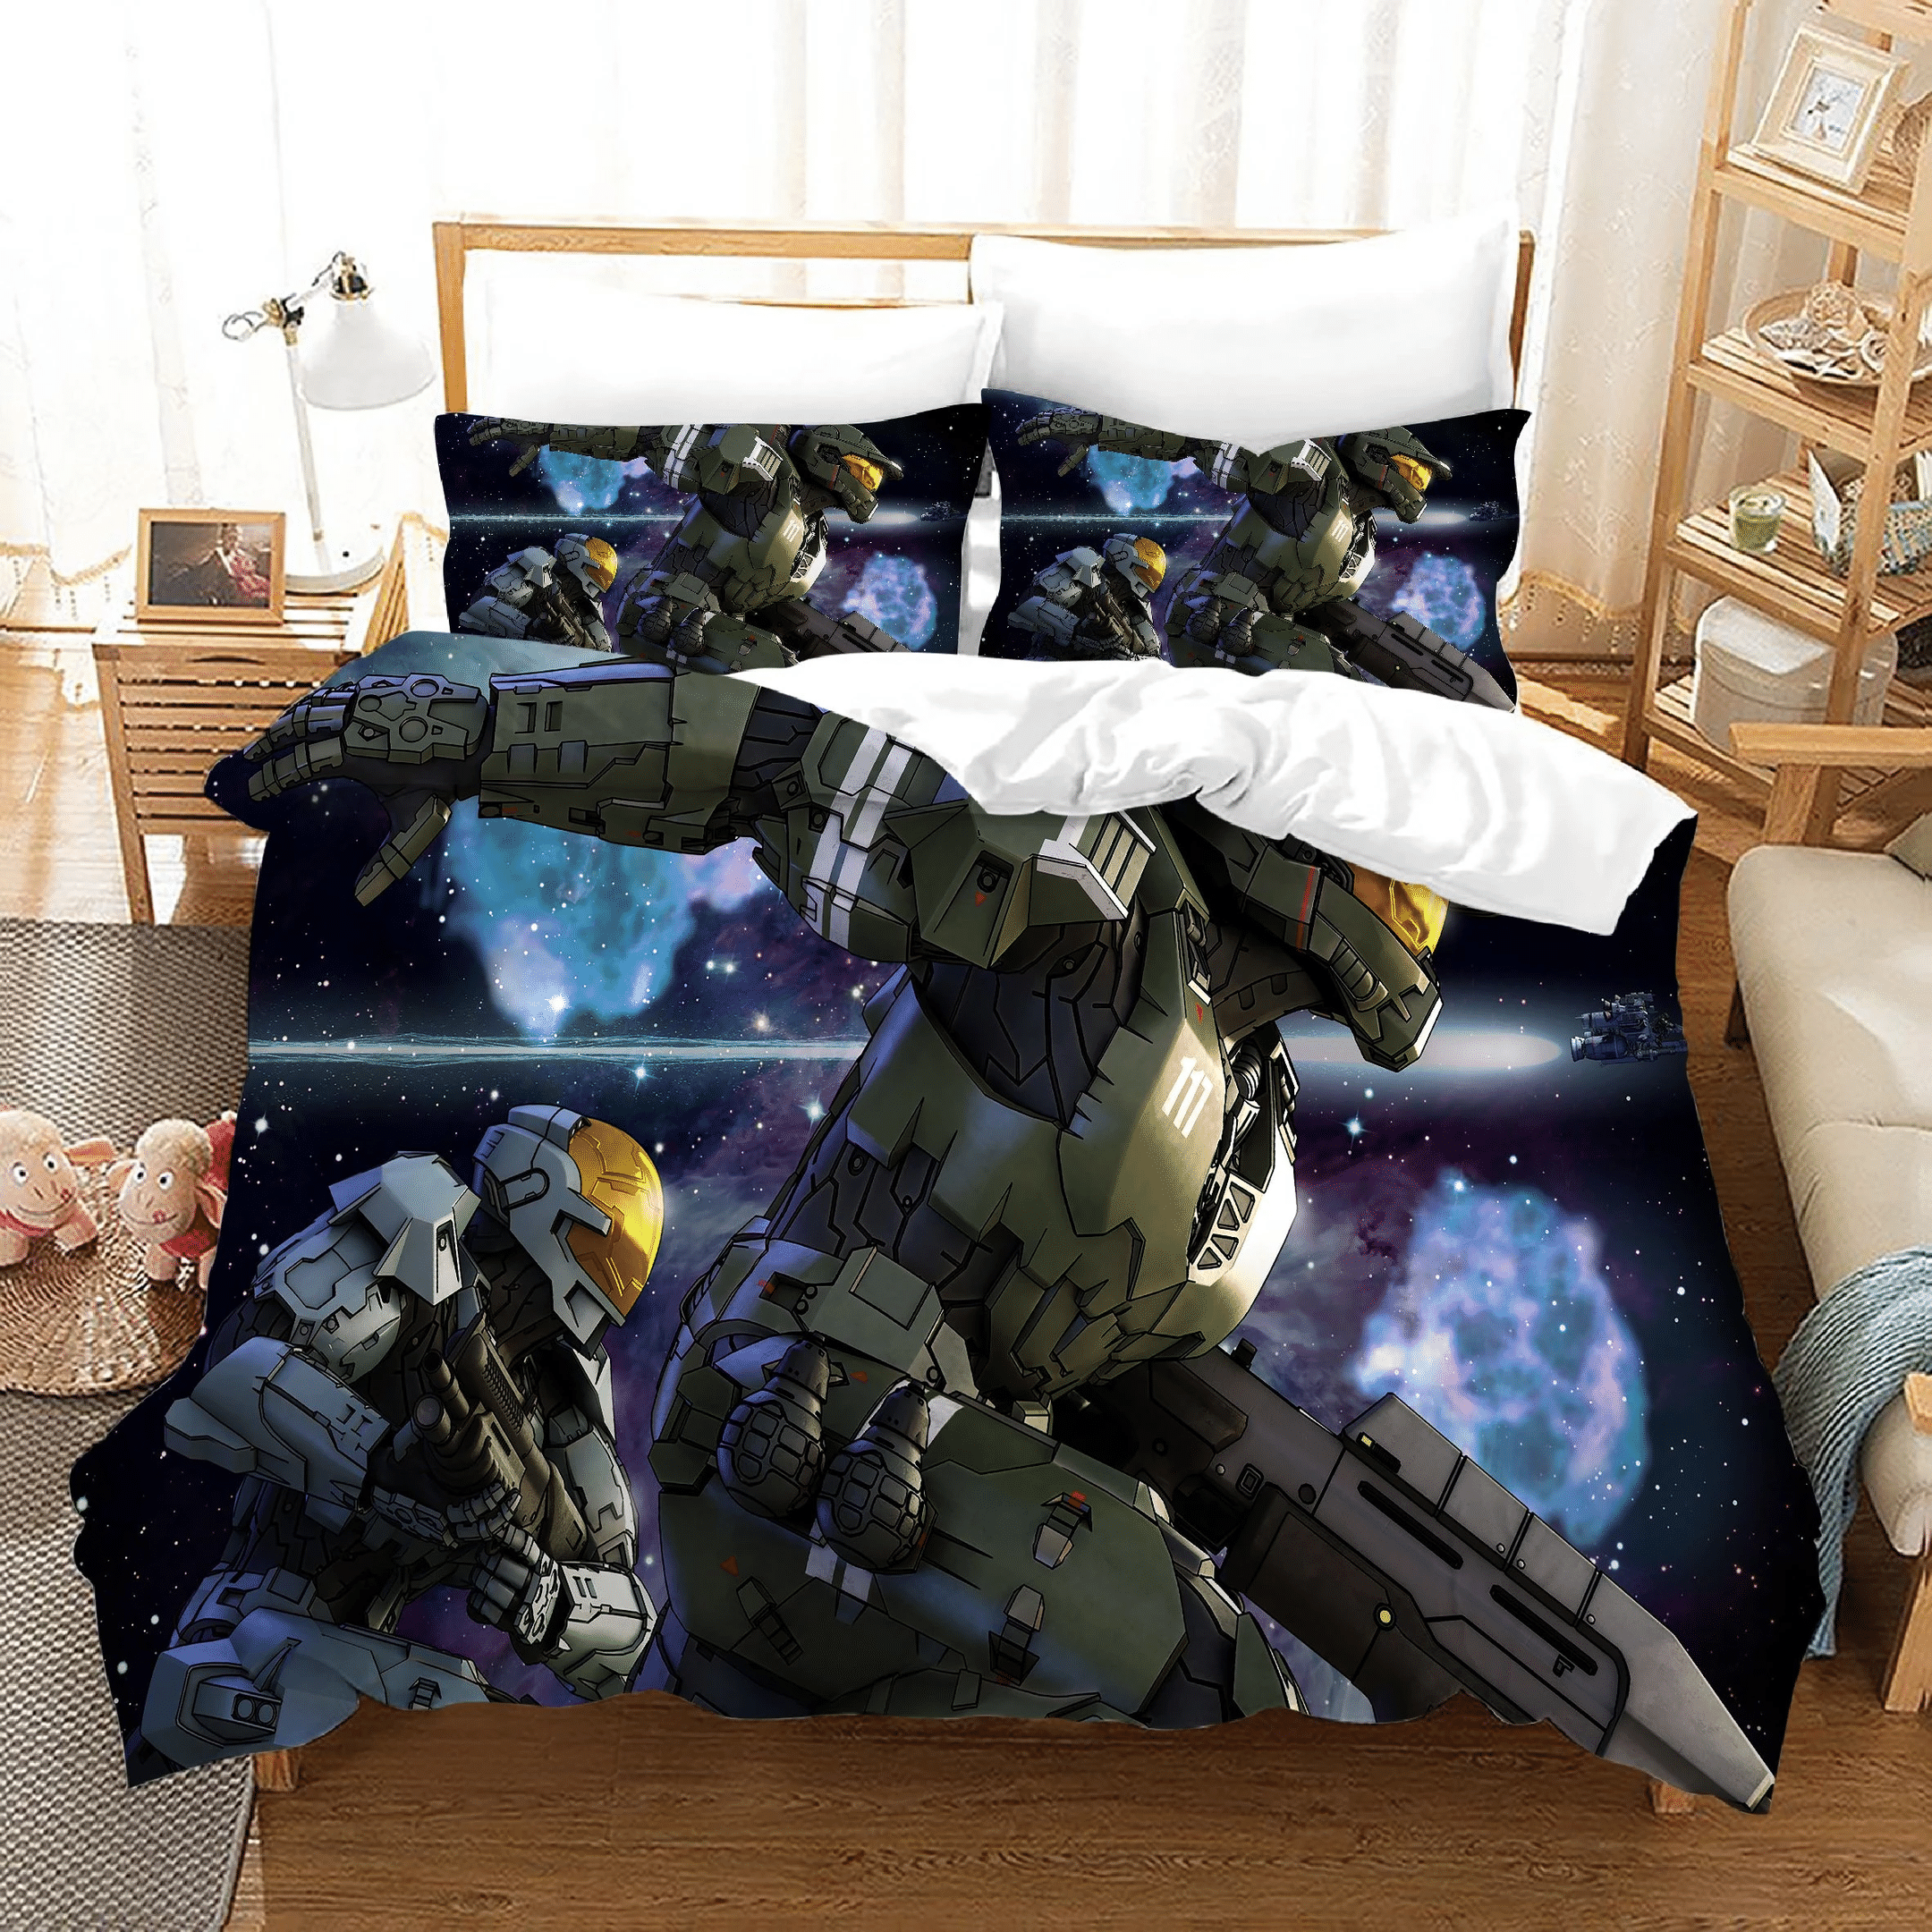 Halo 5 Guardians 5 Duvet Cover Quilt Cover Pillowcase Bedding